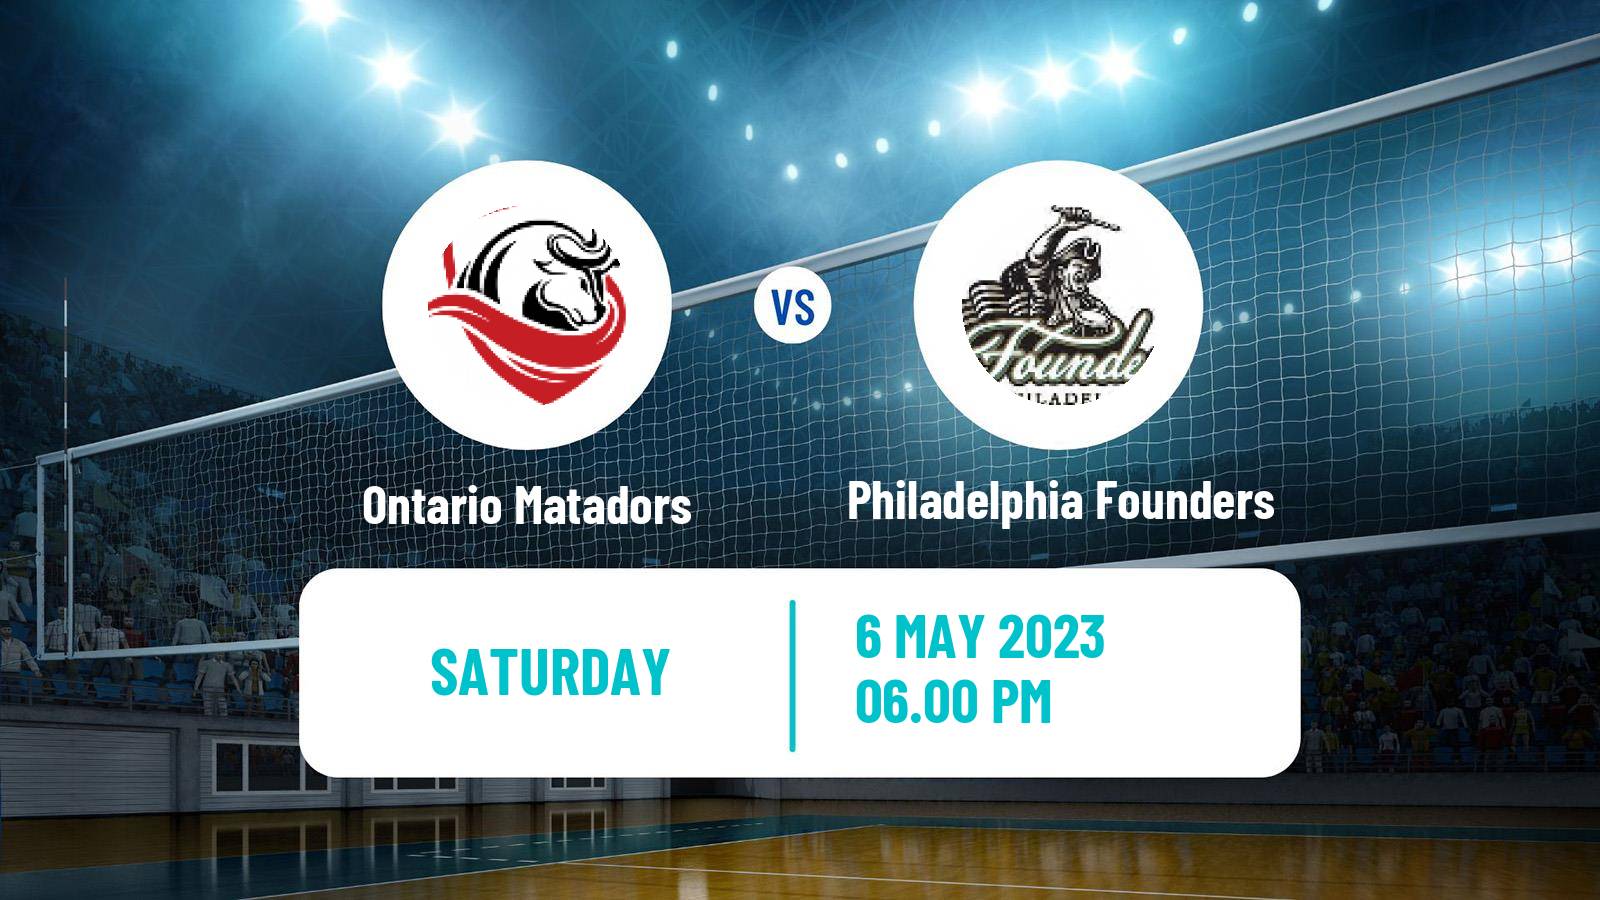 Volleyball NVA Ontario Matadors - Philadelphia Founders